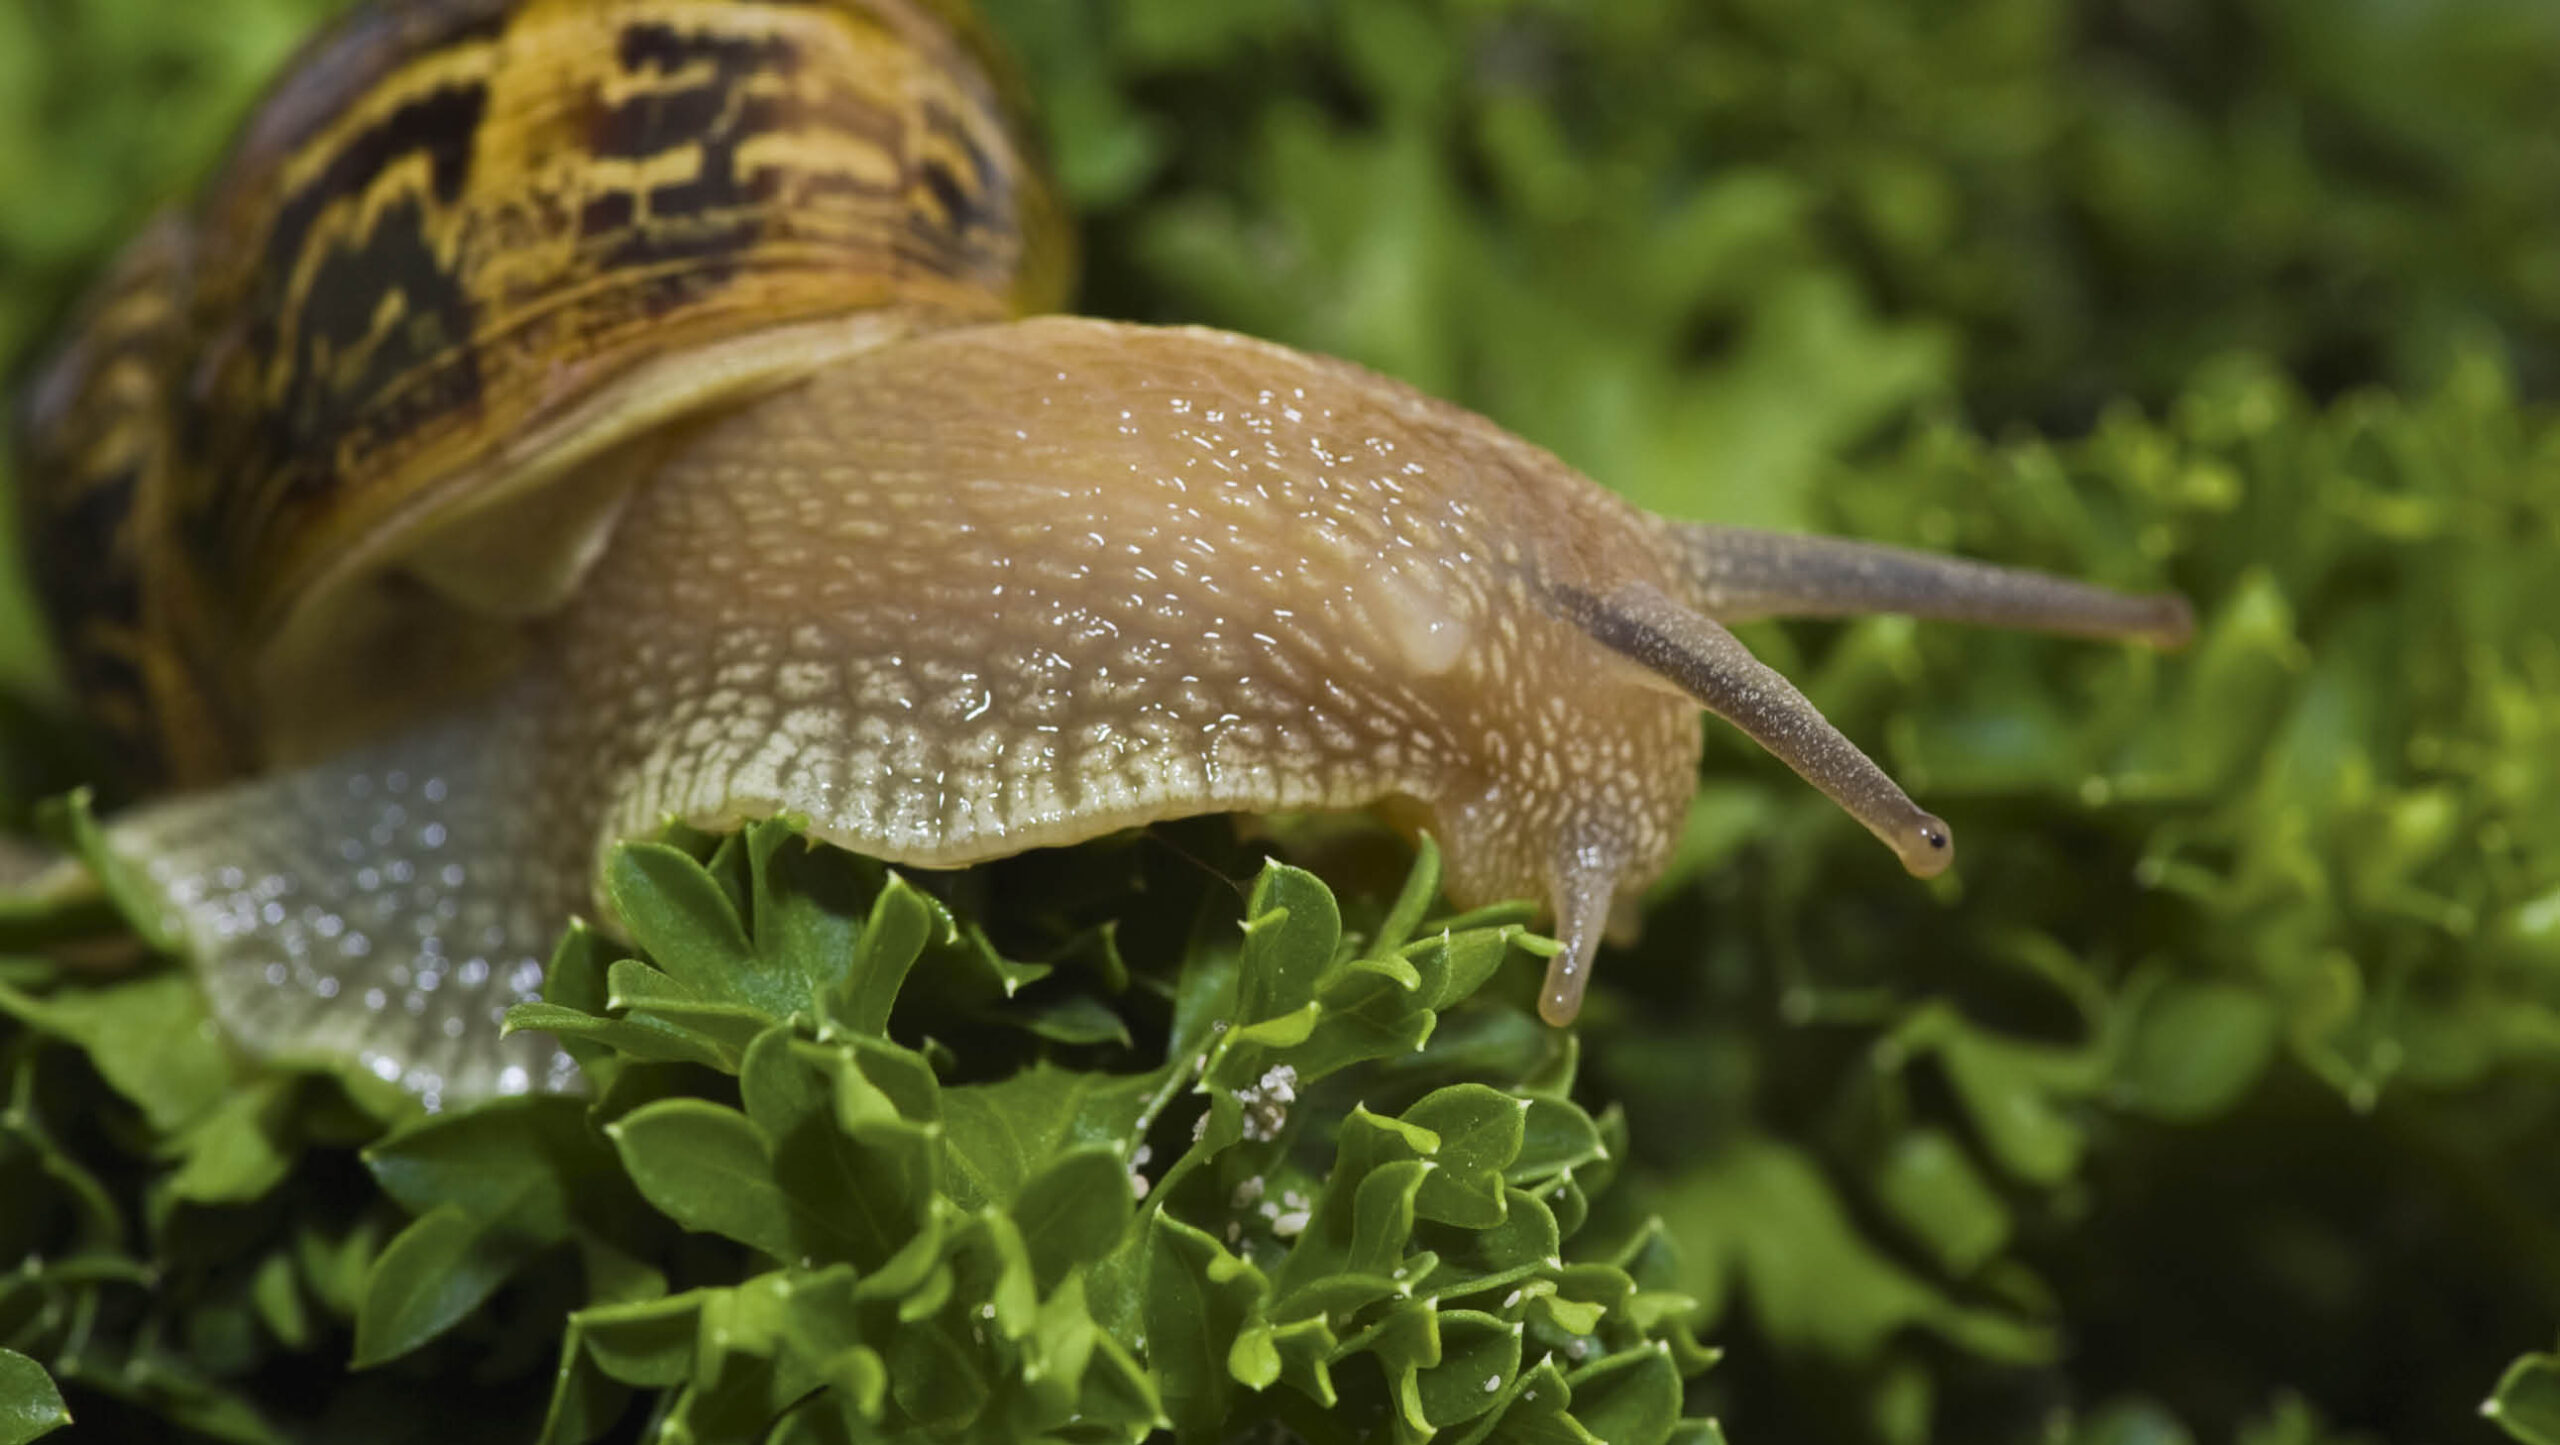 Snails love tender plants and seedlings.